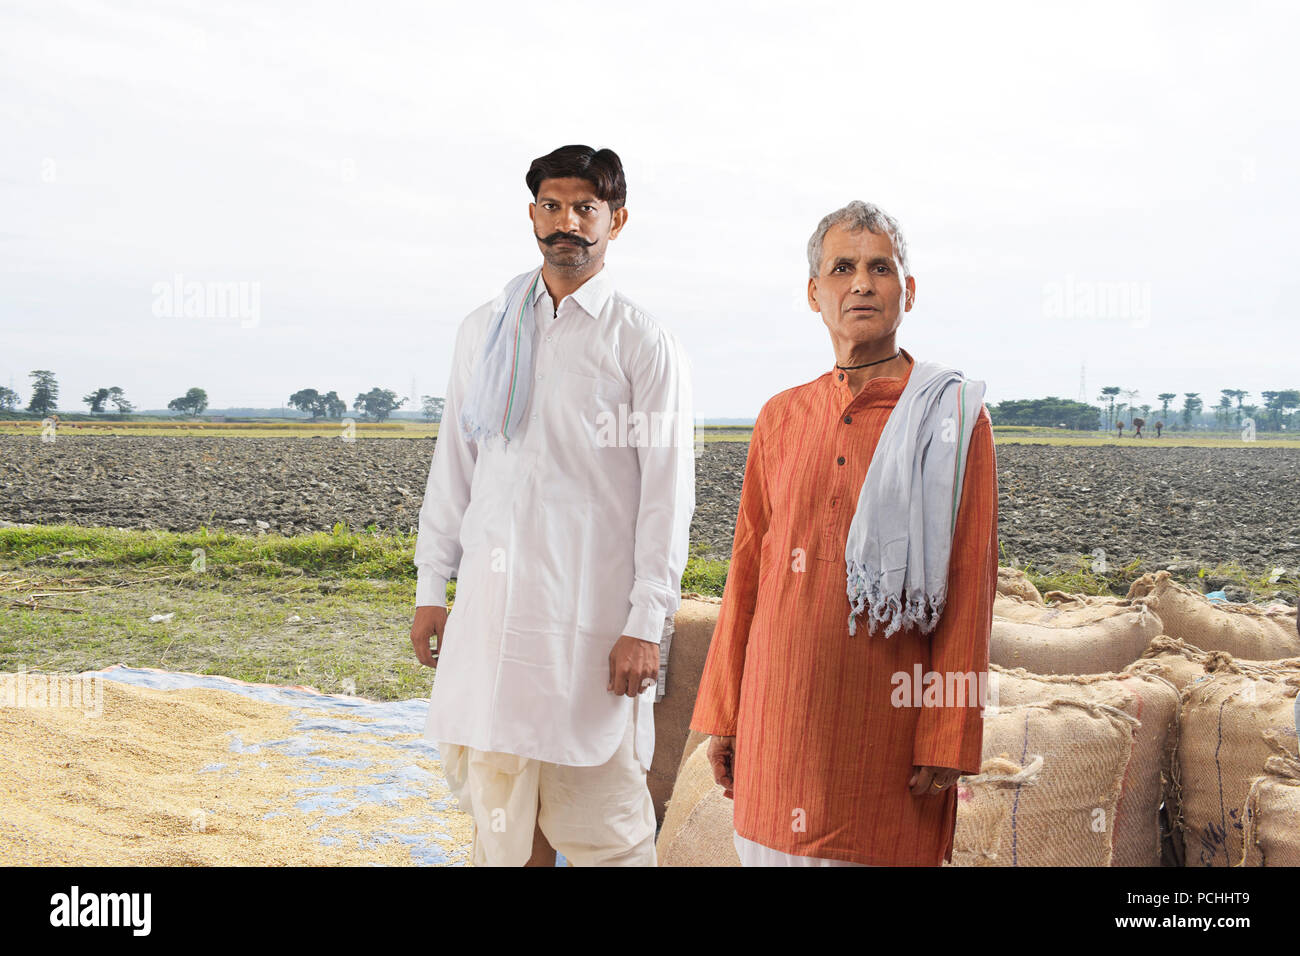 Portrait of two farmers standing in field Stock Photo